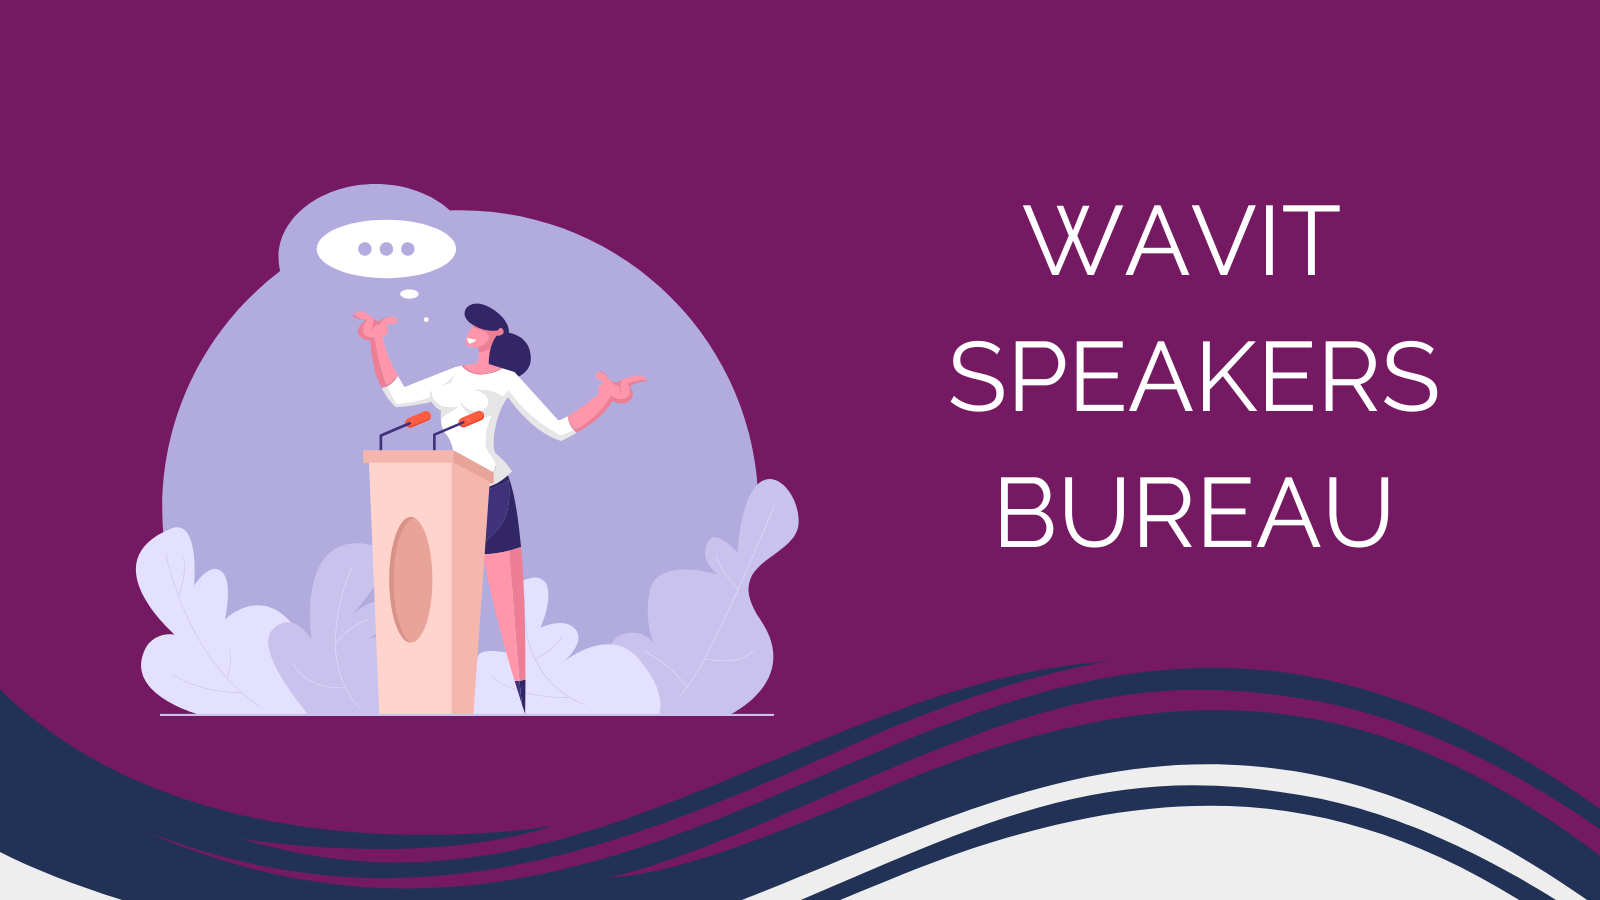 WAVIT Speakers Bureau Press Release